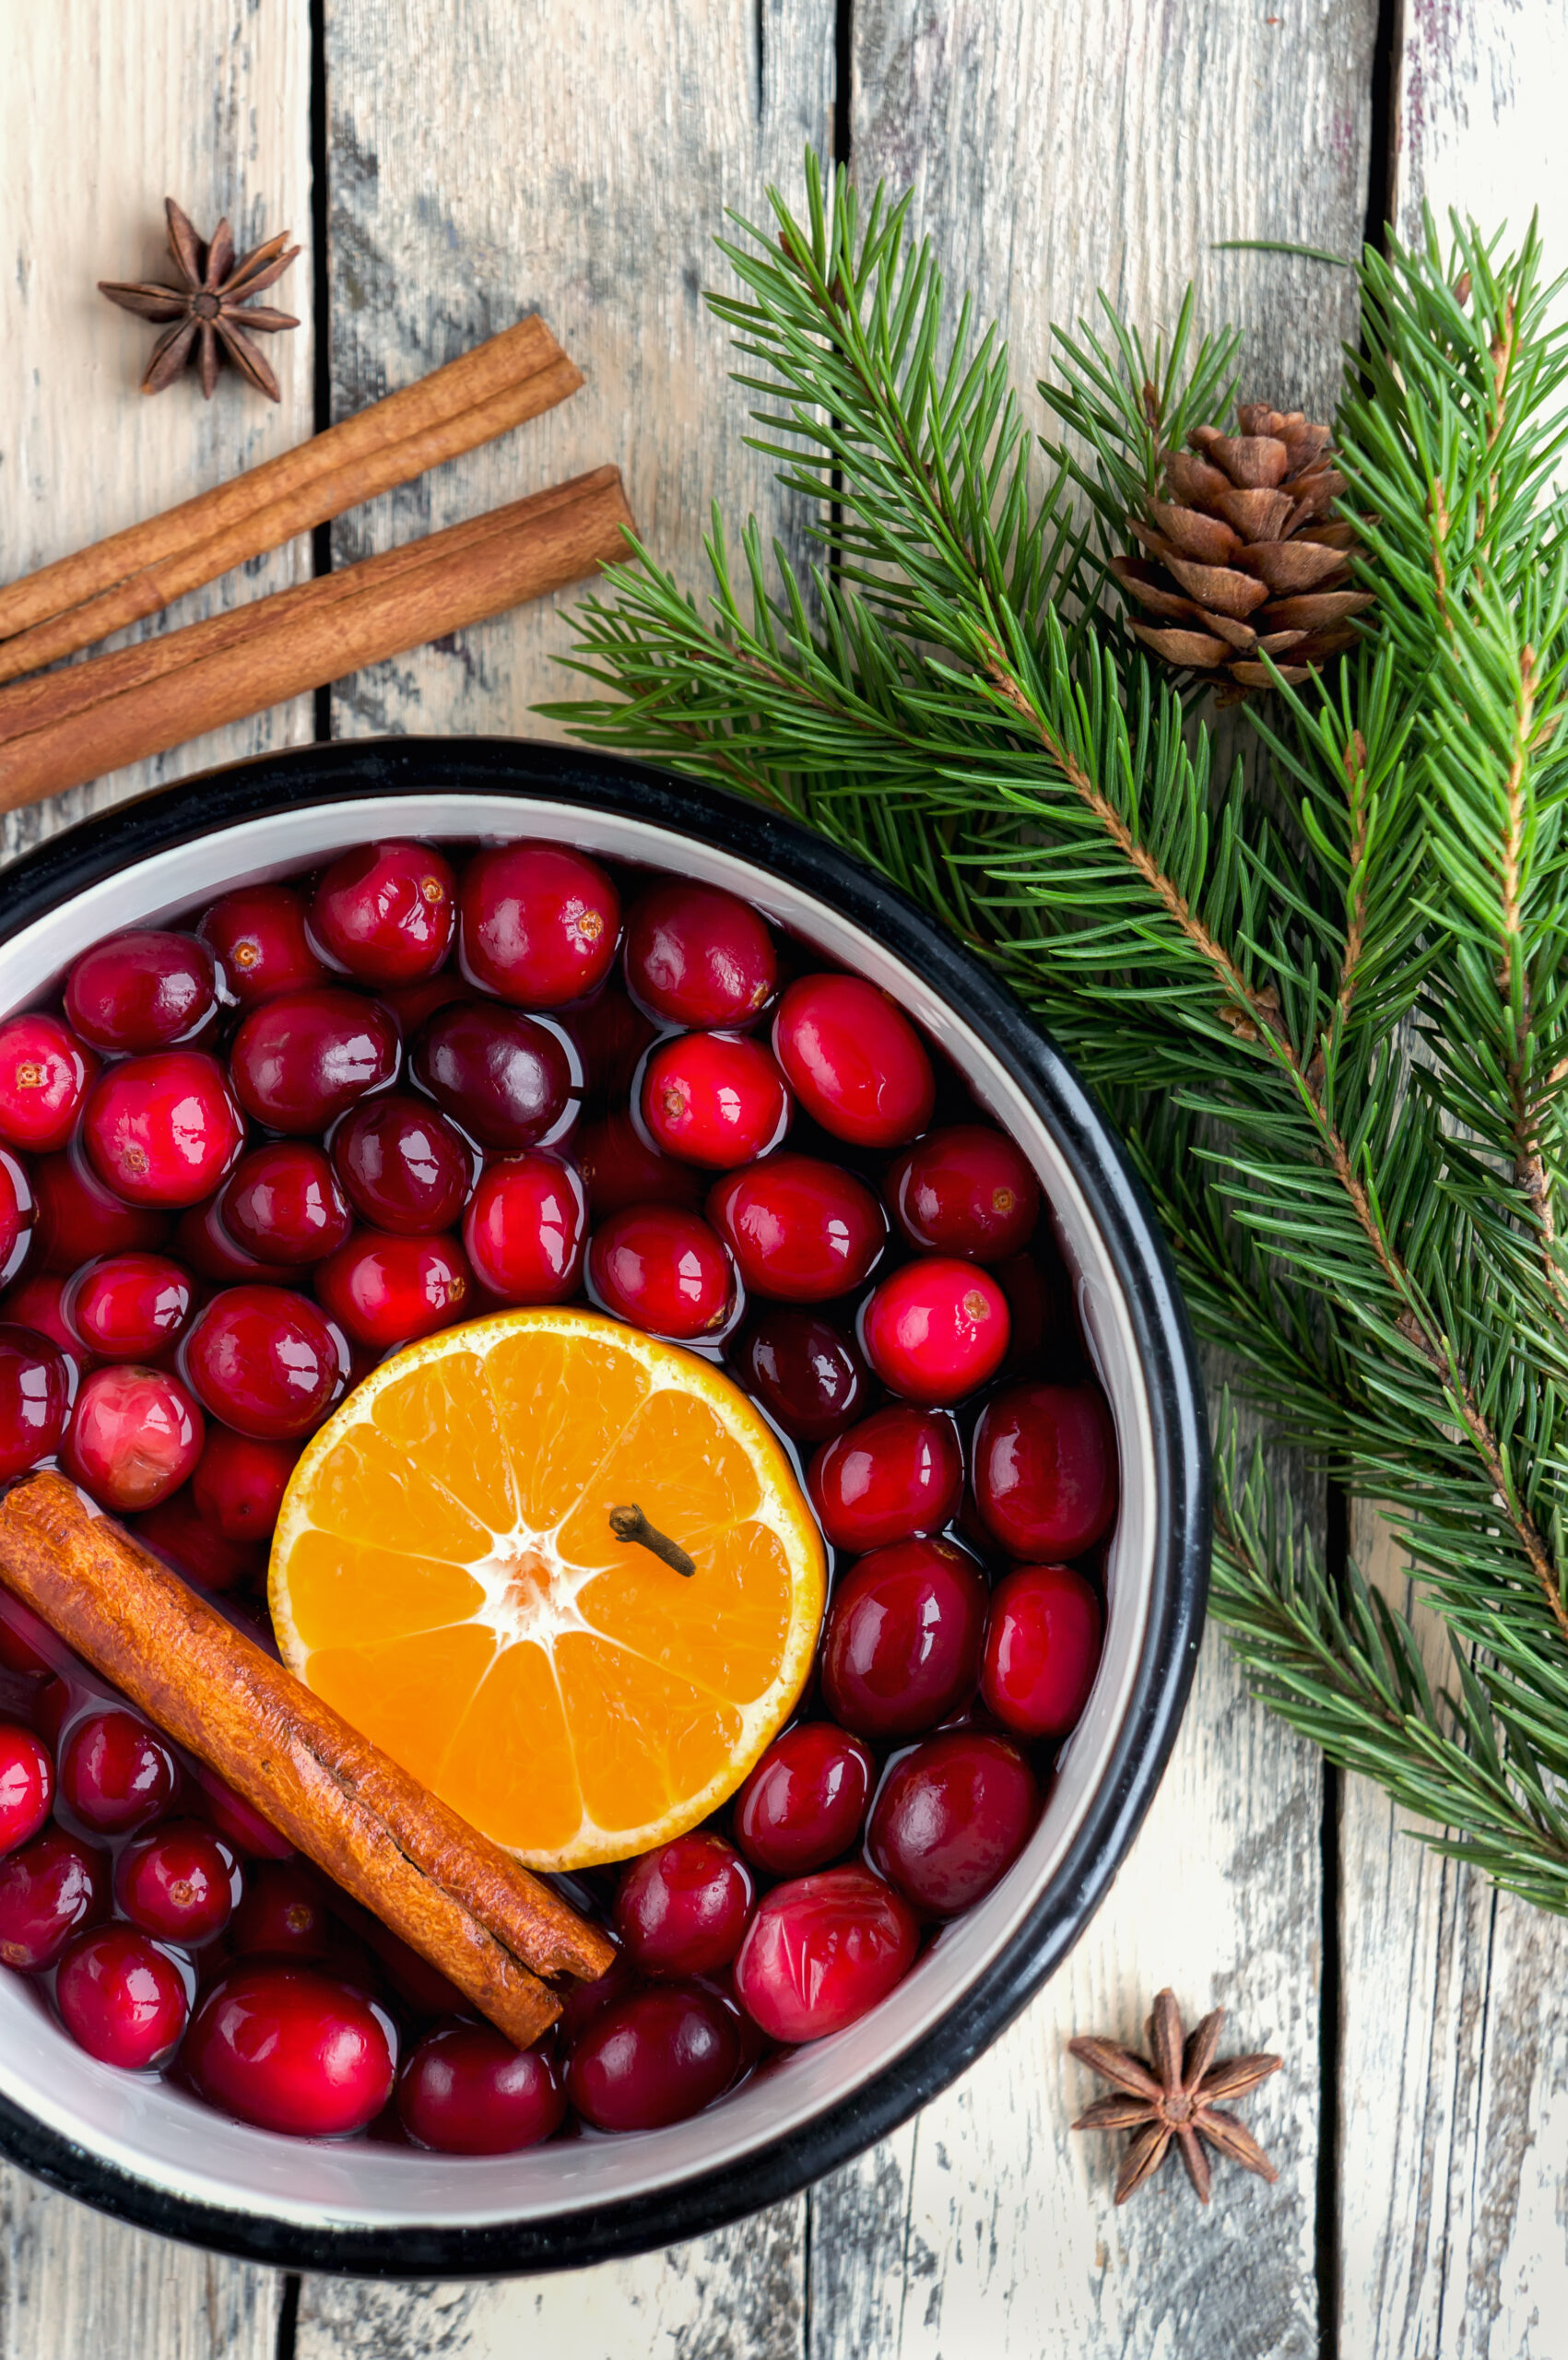 Christmas Crockpot Potpourri with fruit and essential oils - Love, Jaime